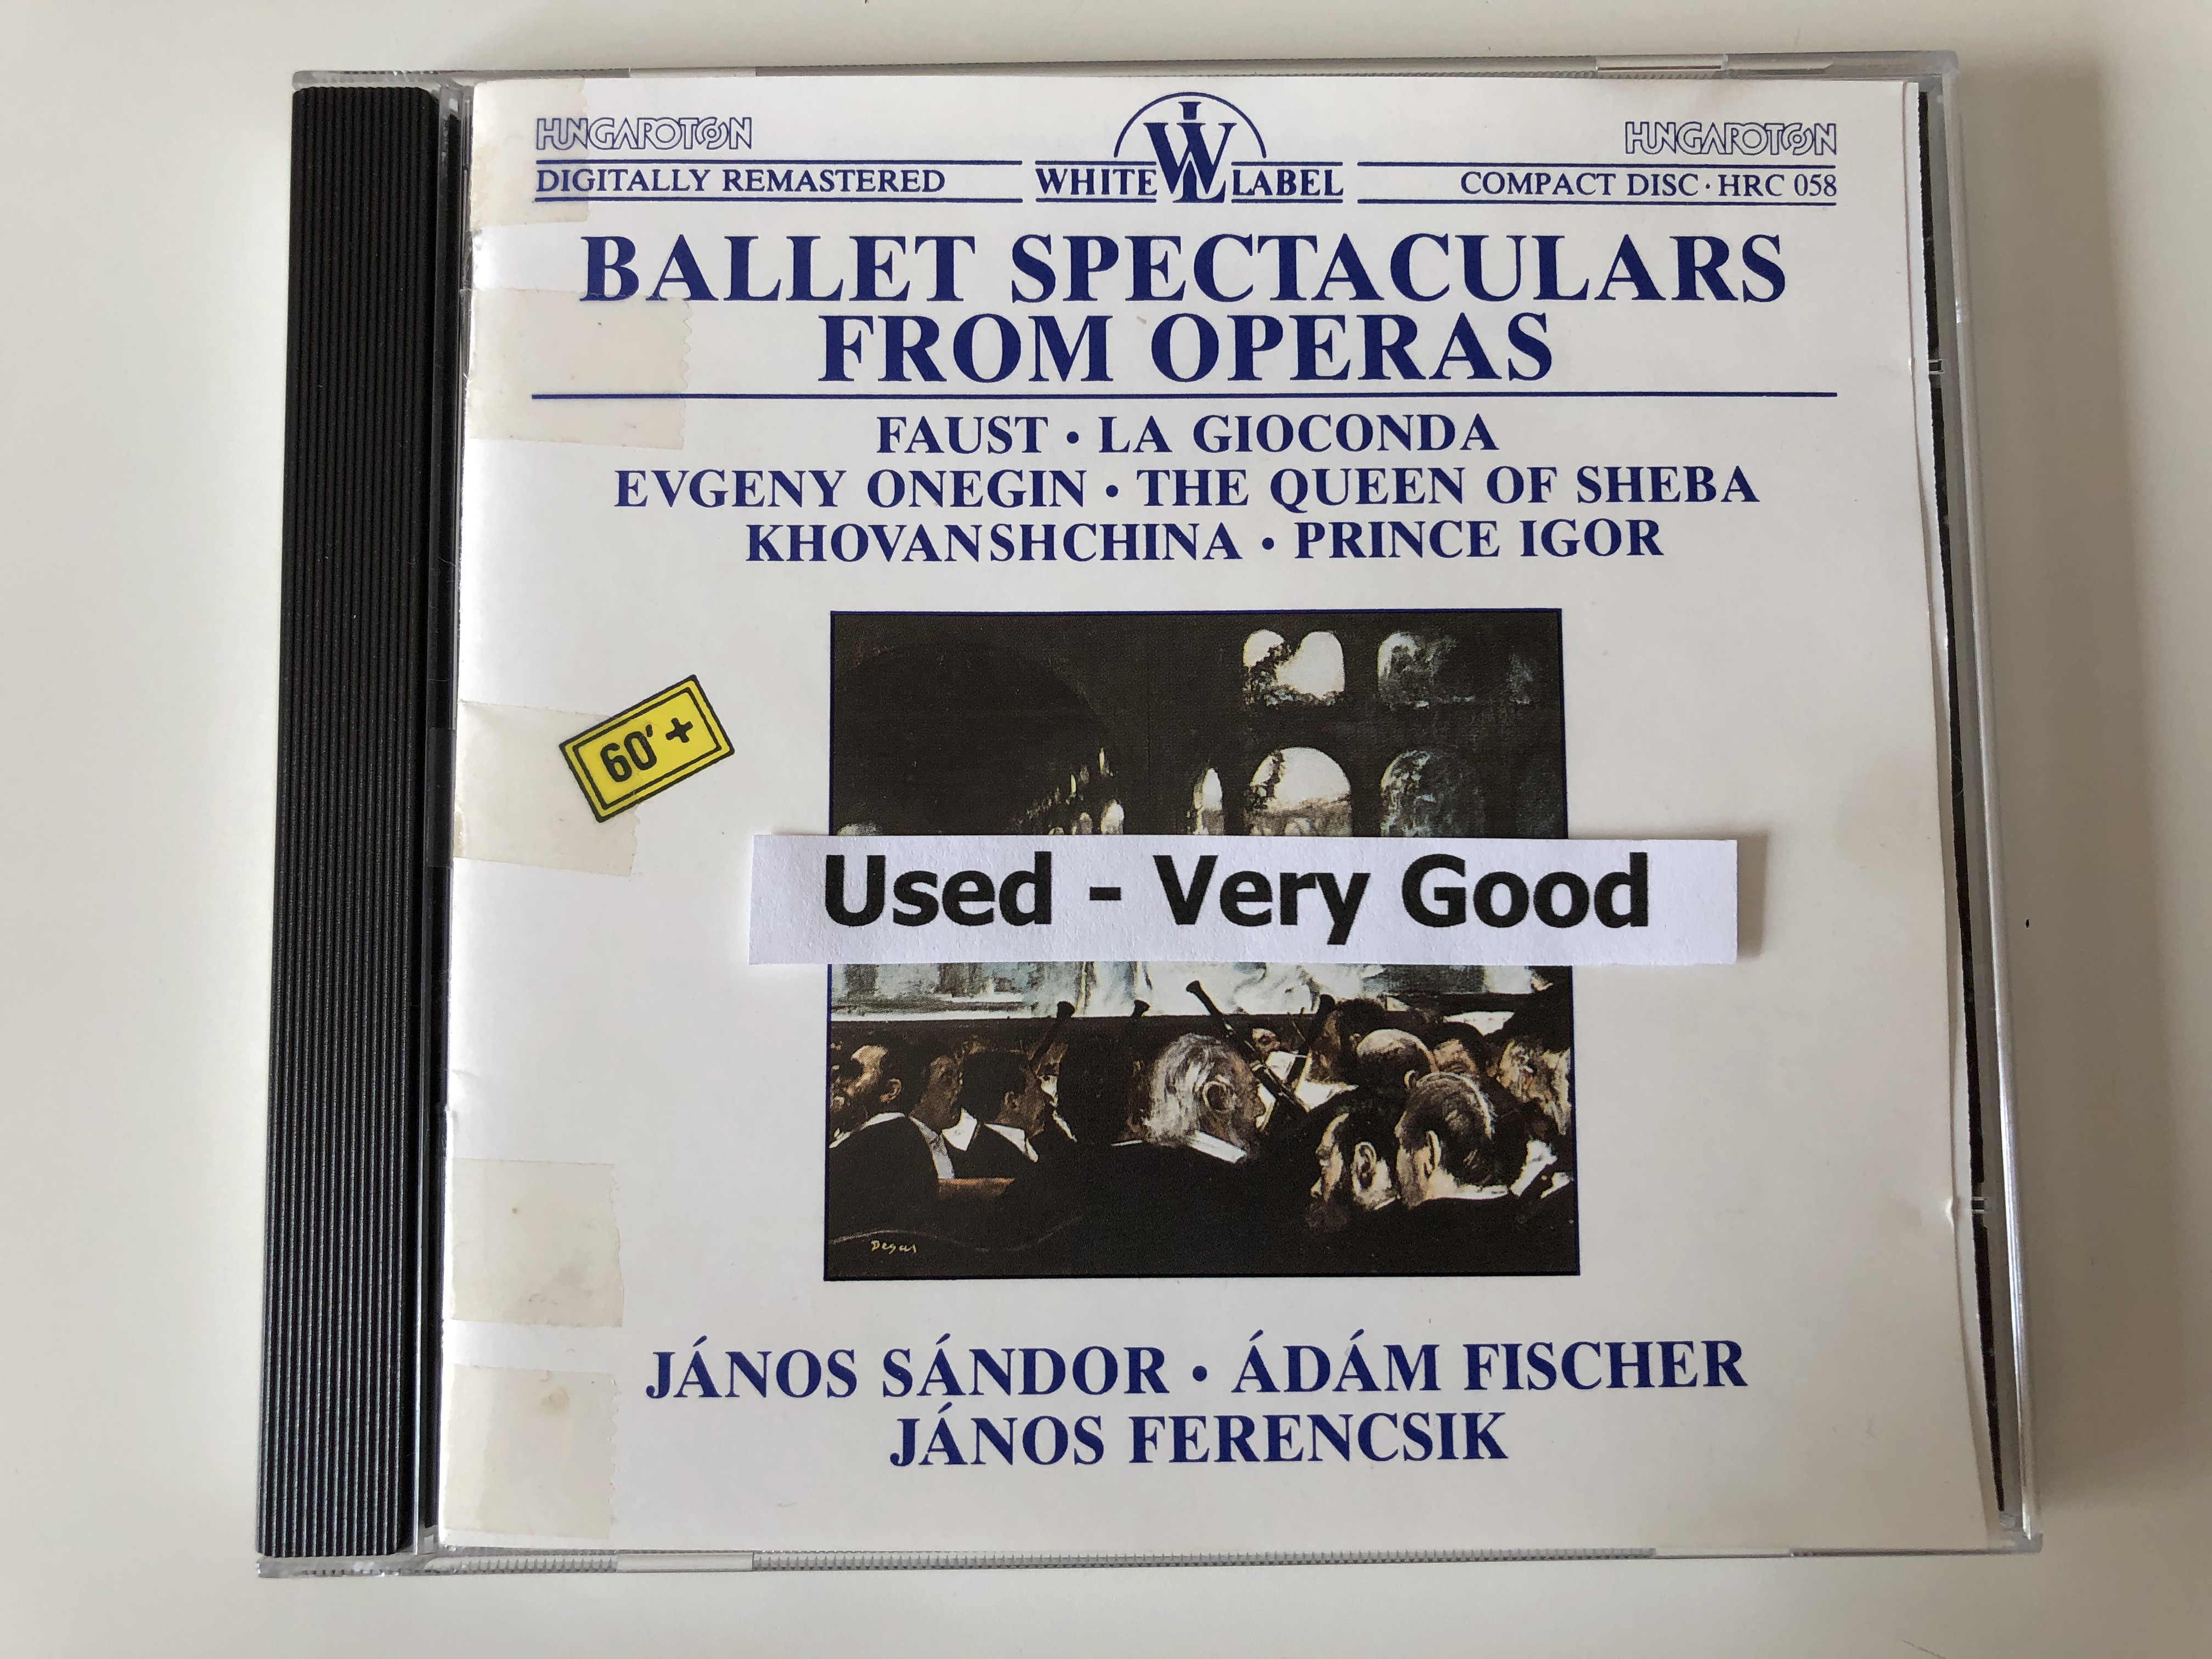 ballet-spectaculars-from-operas-faust-la-gioconda-evgeny-onegin-the-queen-of-sheba-khovanshchina-prince-igor-janos-sandor-adam-fischer-janos-ferencsik-hungaroton-audio-cd-1987-stereo-.jpg